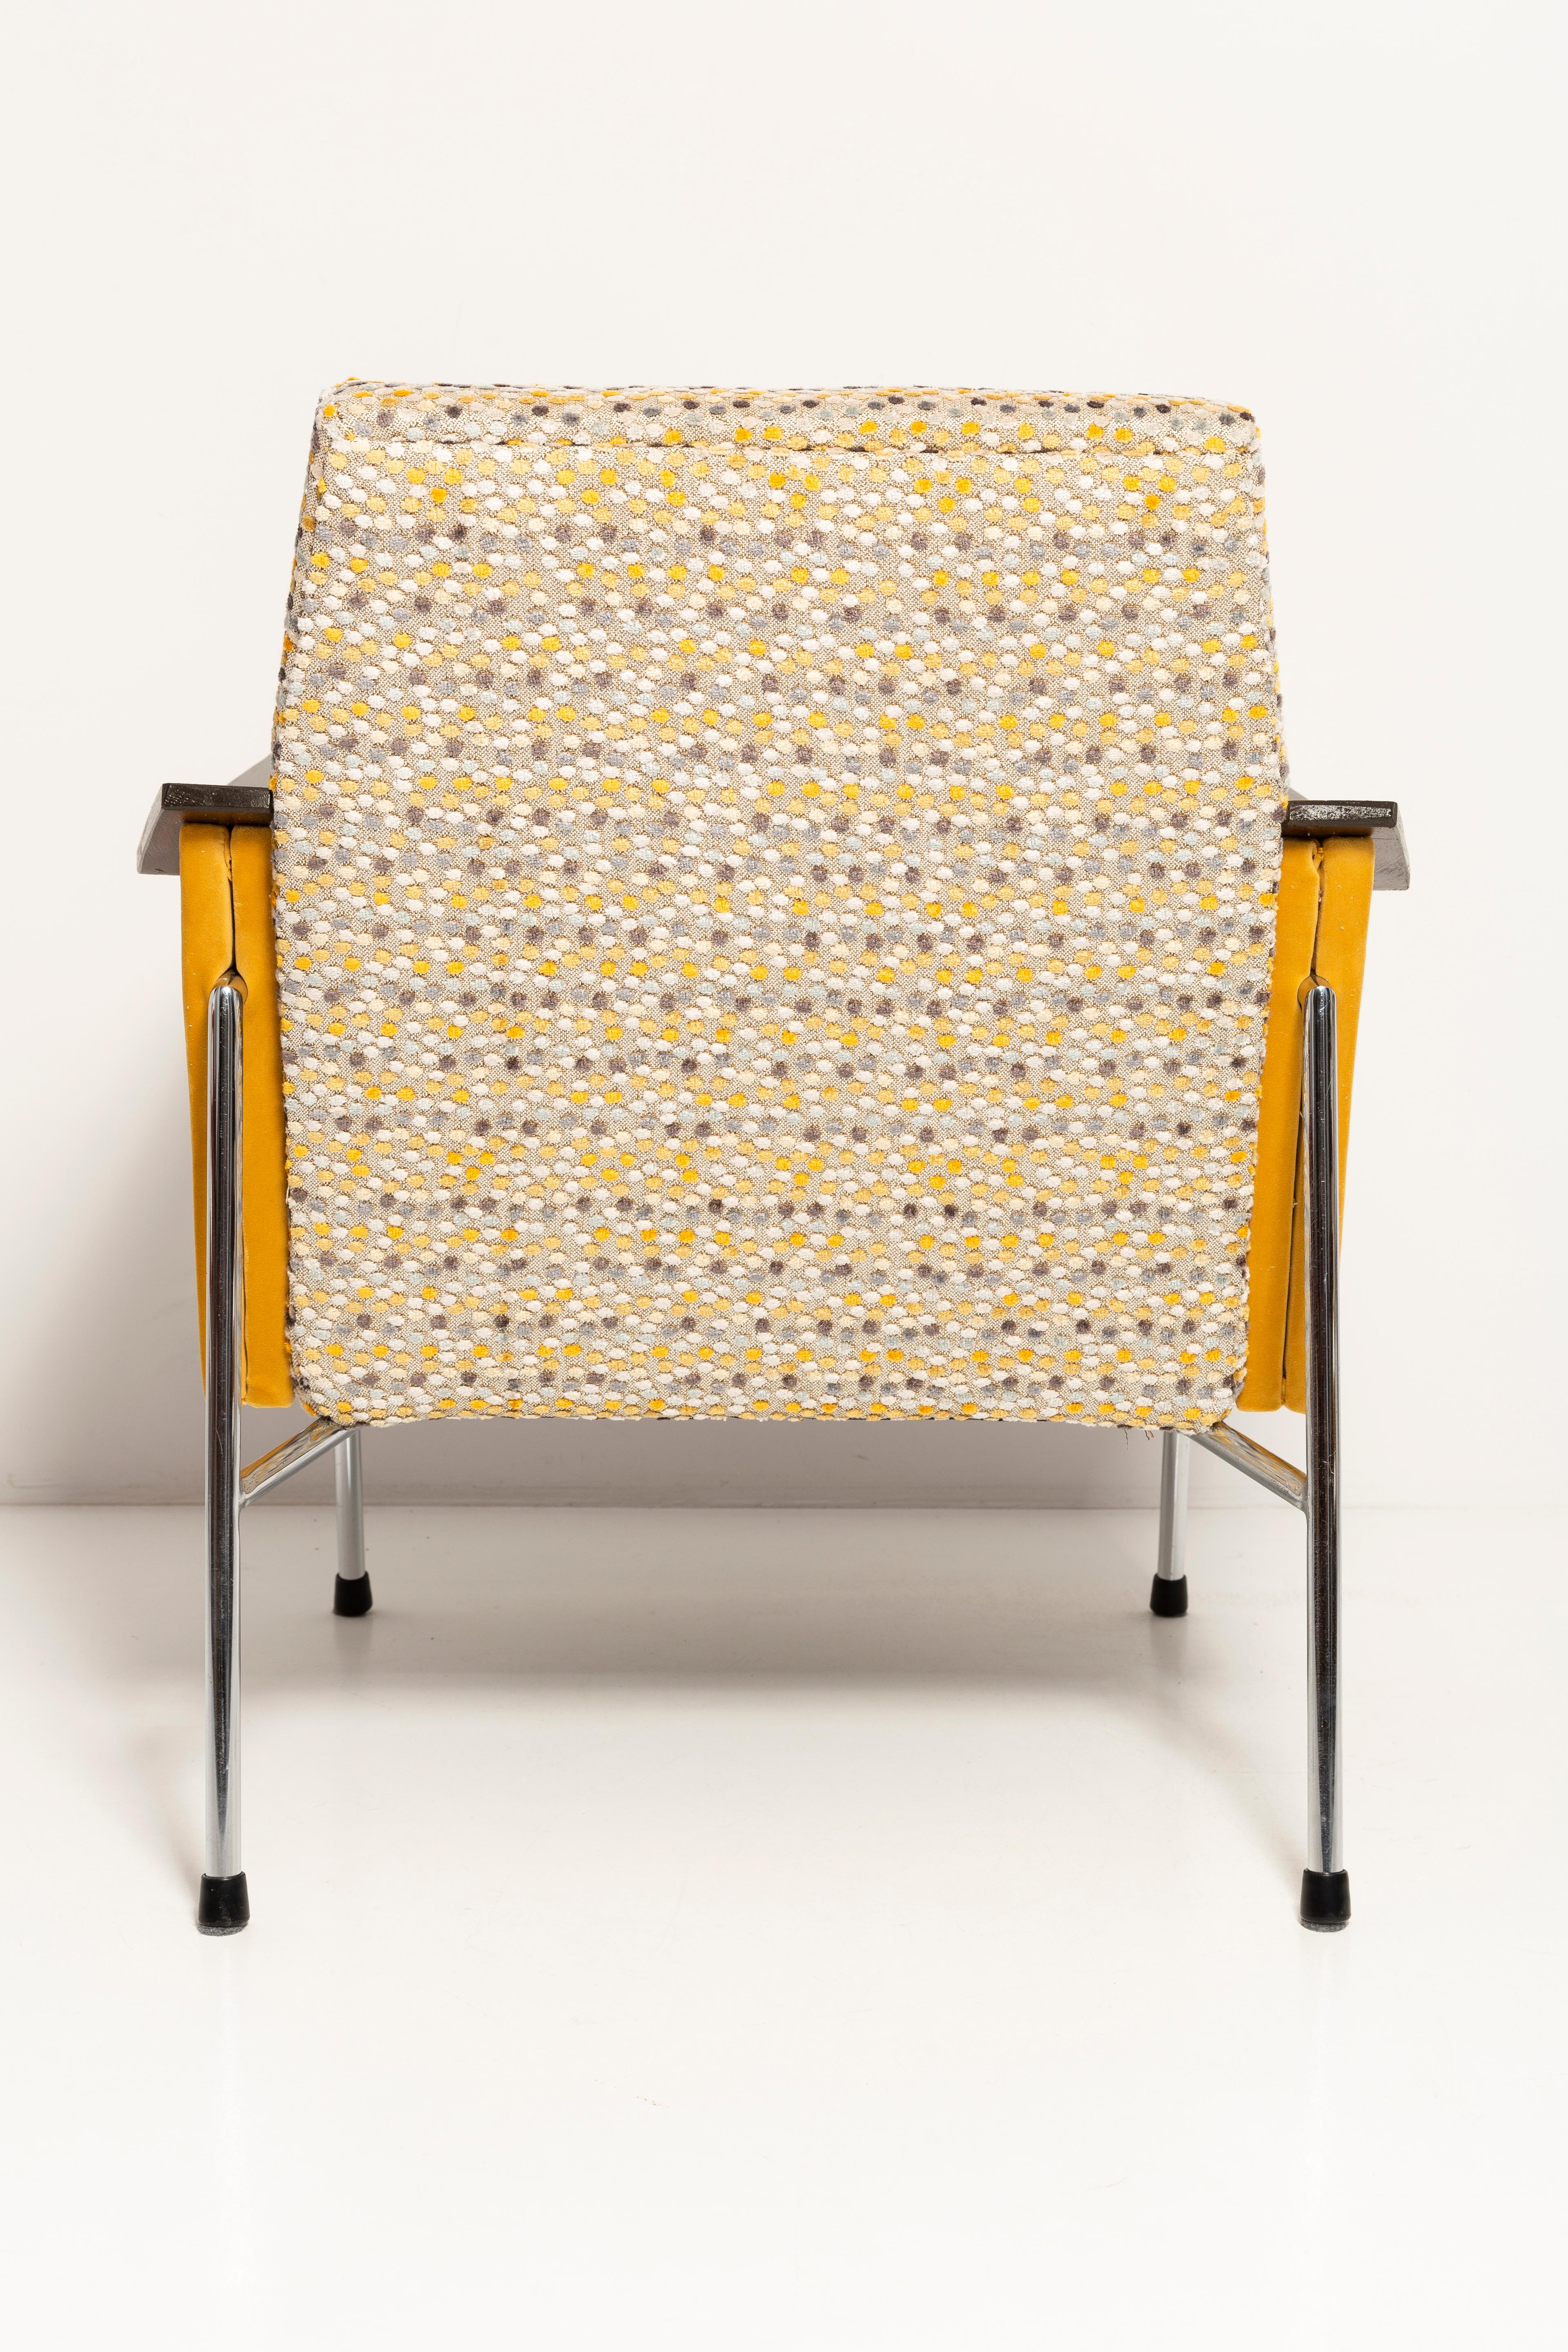 Mid Century Bat Armchair, Yellow Dots, Chrome, Bauhaus Style, Poland, 1970s For Sale 6